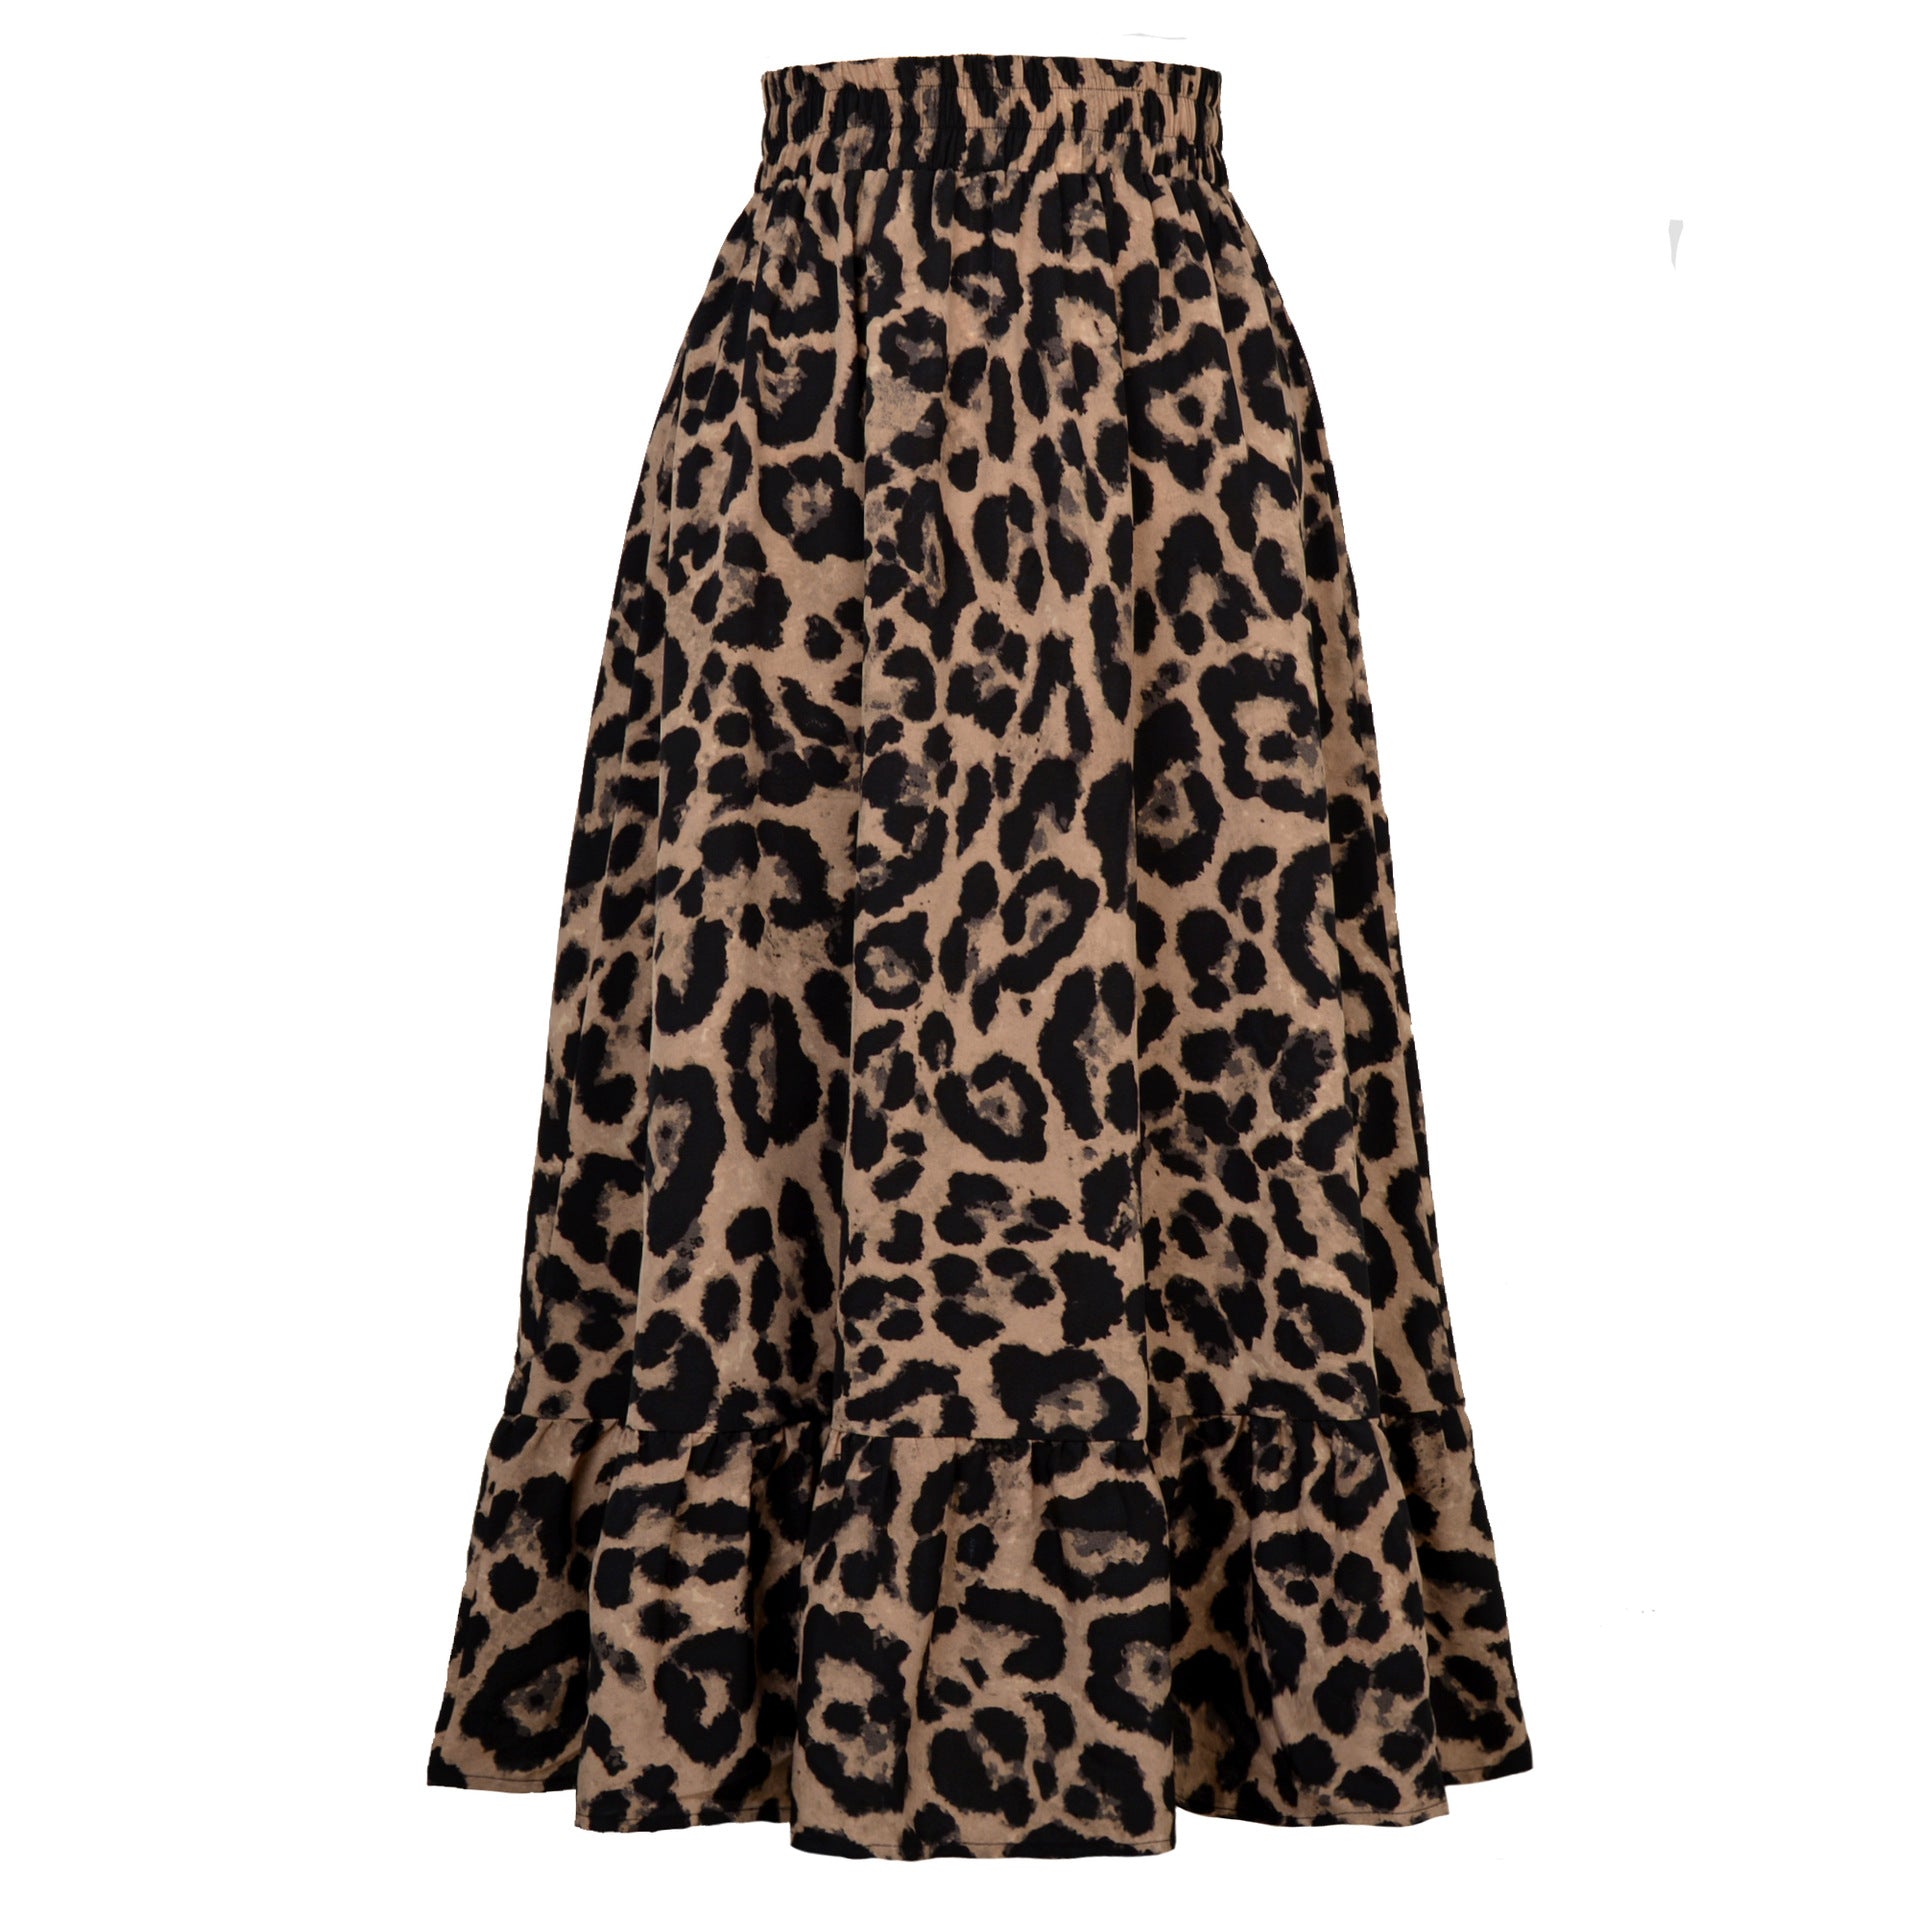 Women's Sexy Leopard Print High Waist Loose Swing Skirts